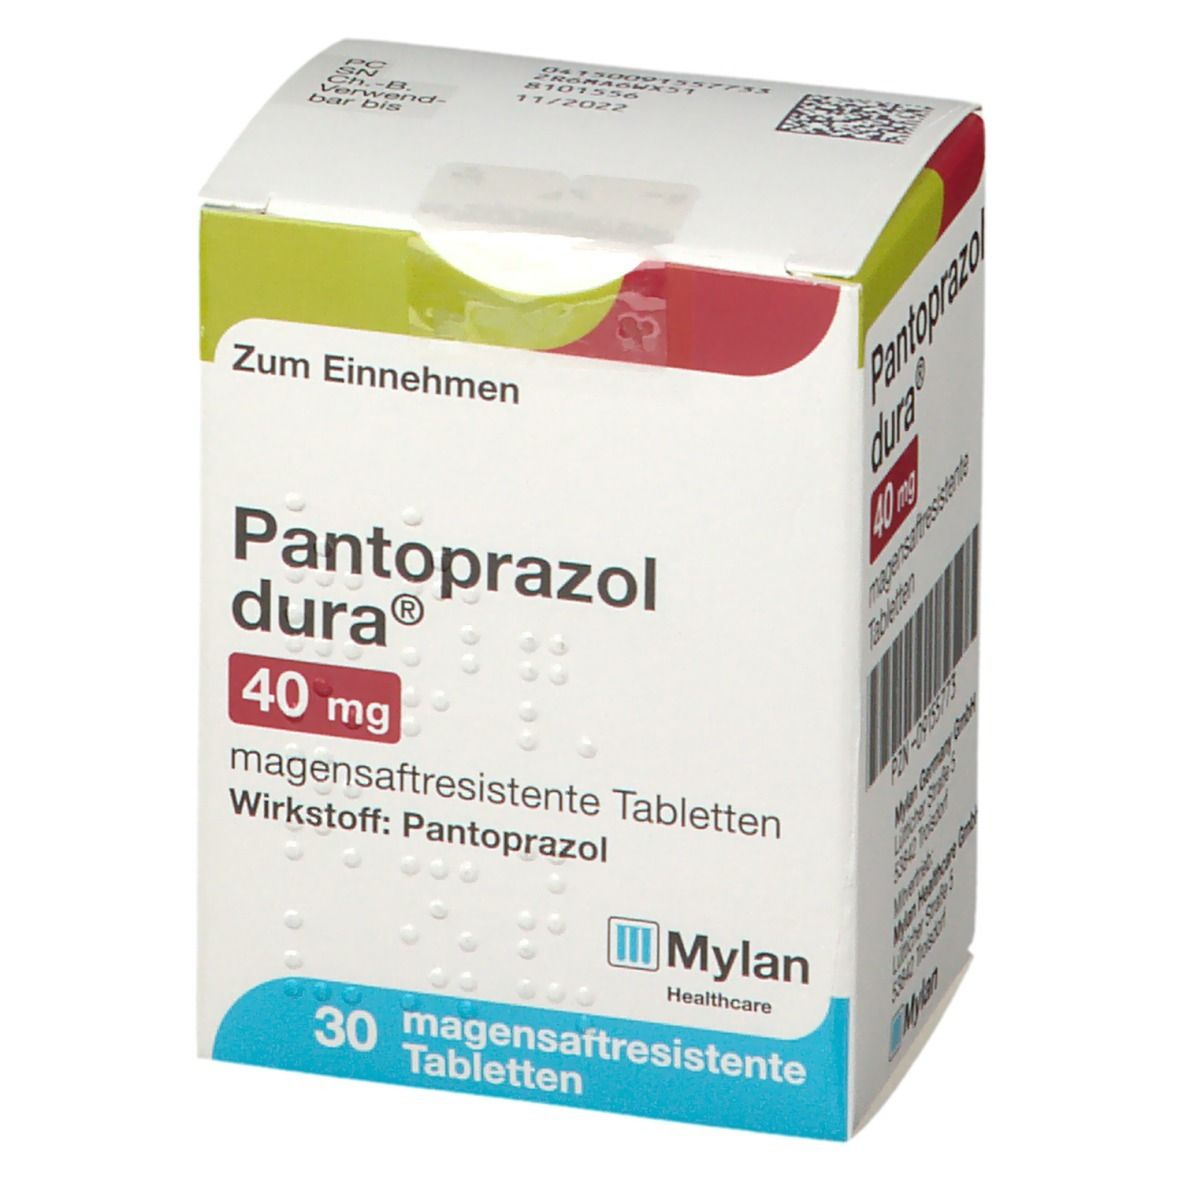 Pantoprazol dura® 40 mg